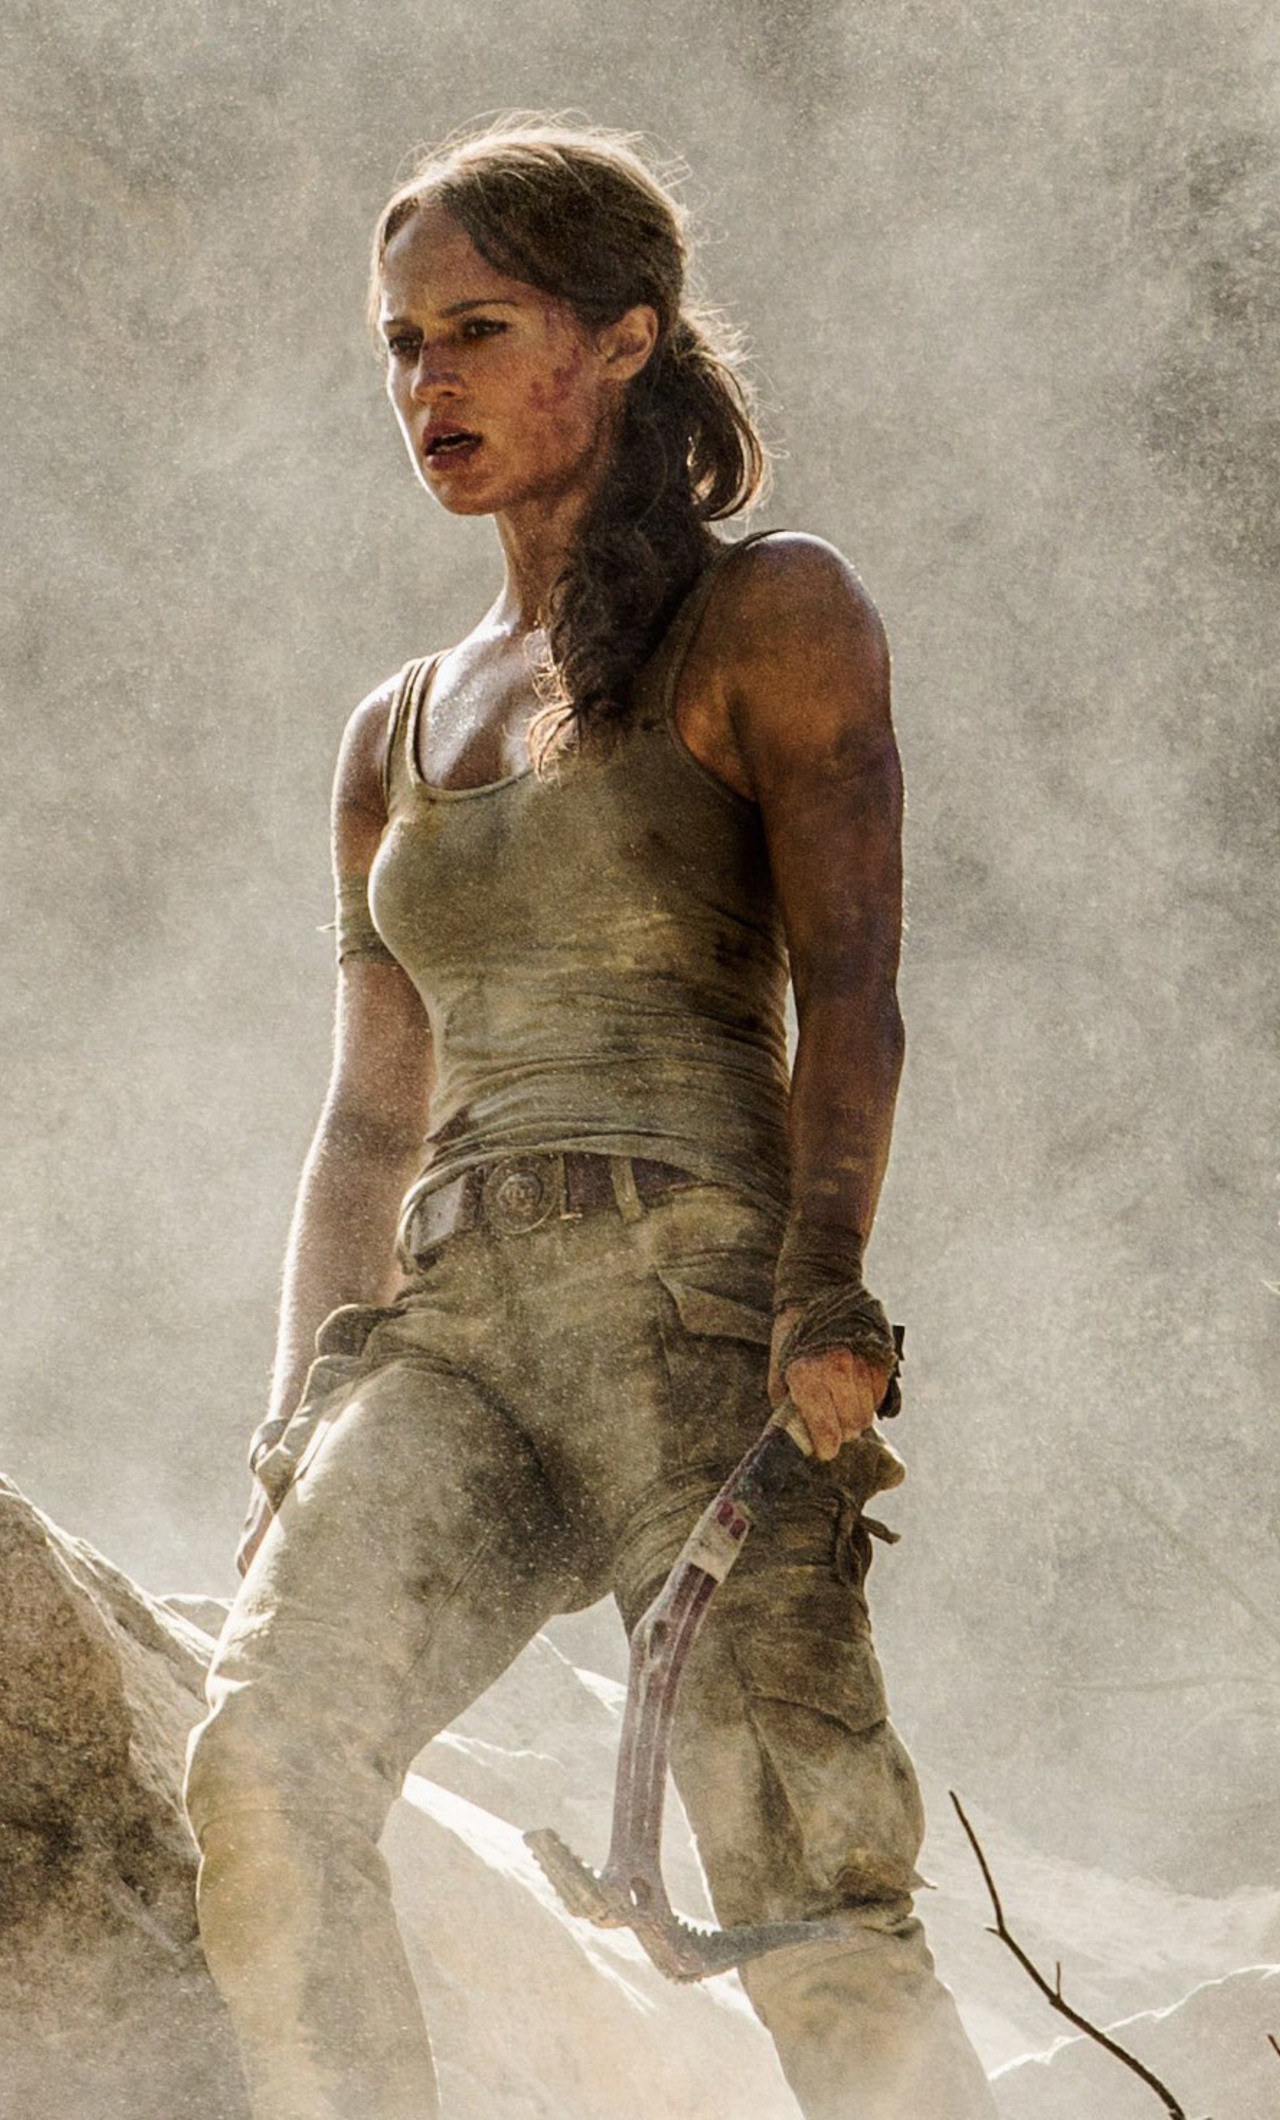 Tomb Raider HD Wallpaper Image